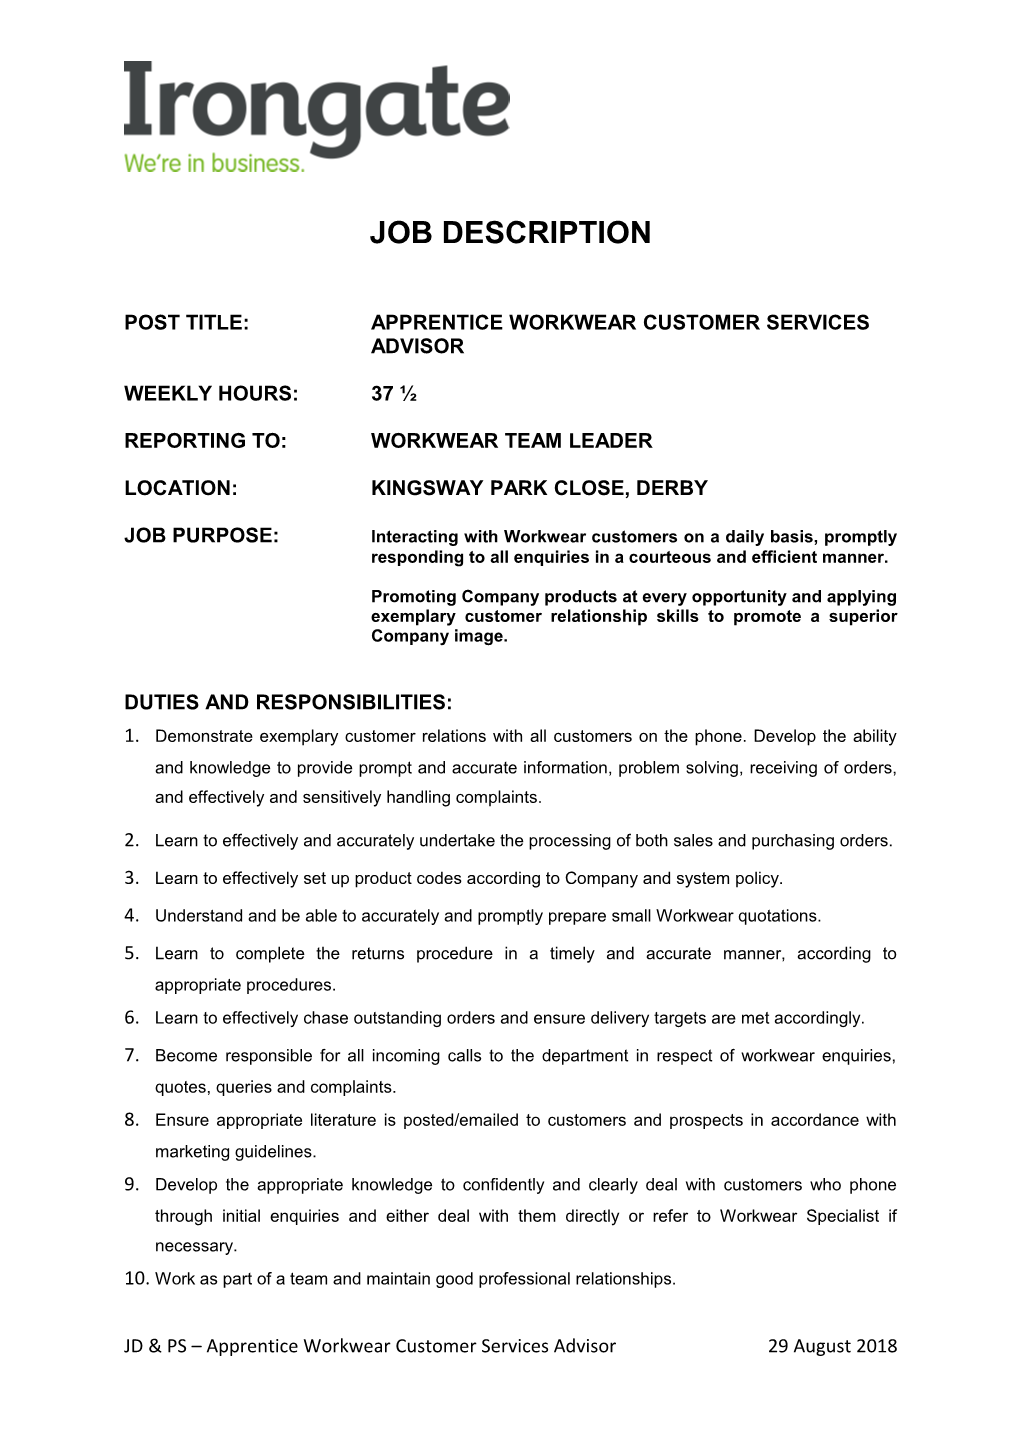 Post Title:Apprentice Workwear Customer Services Advisor